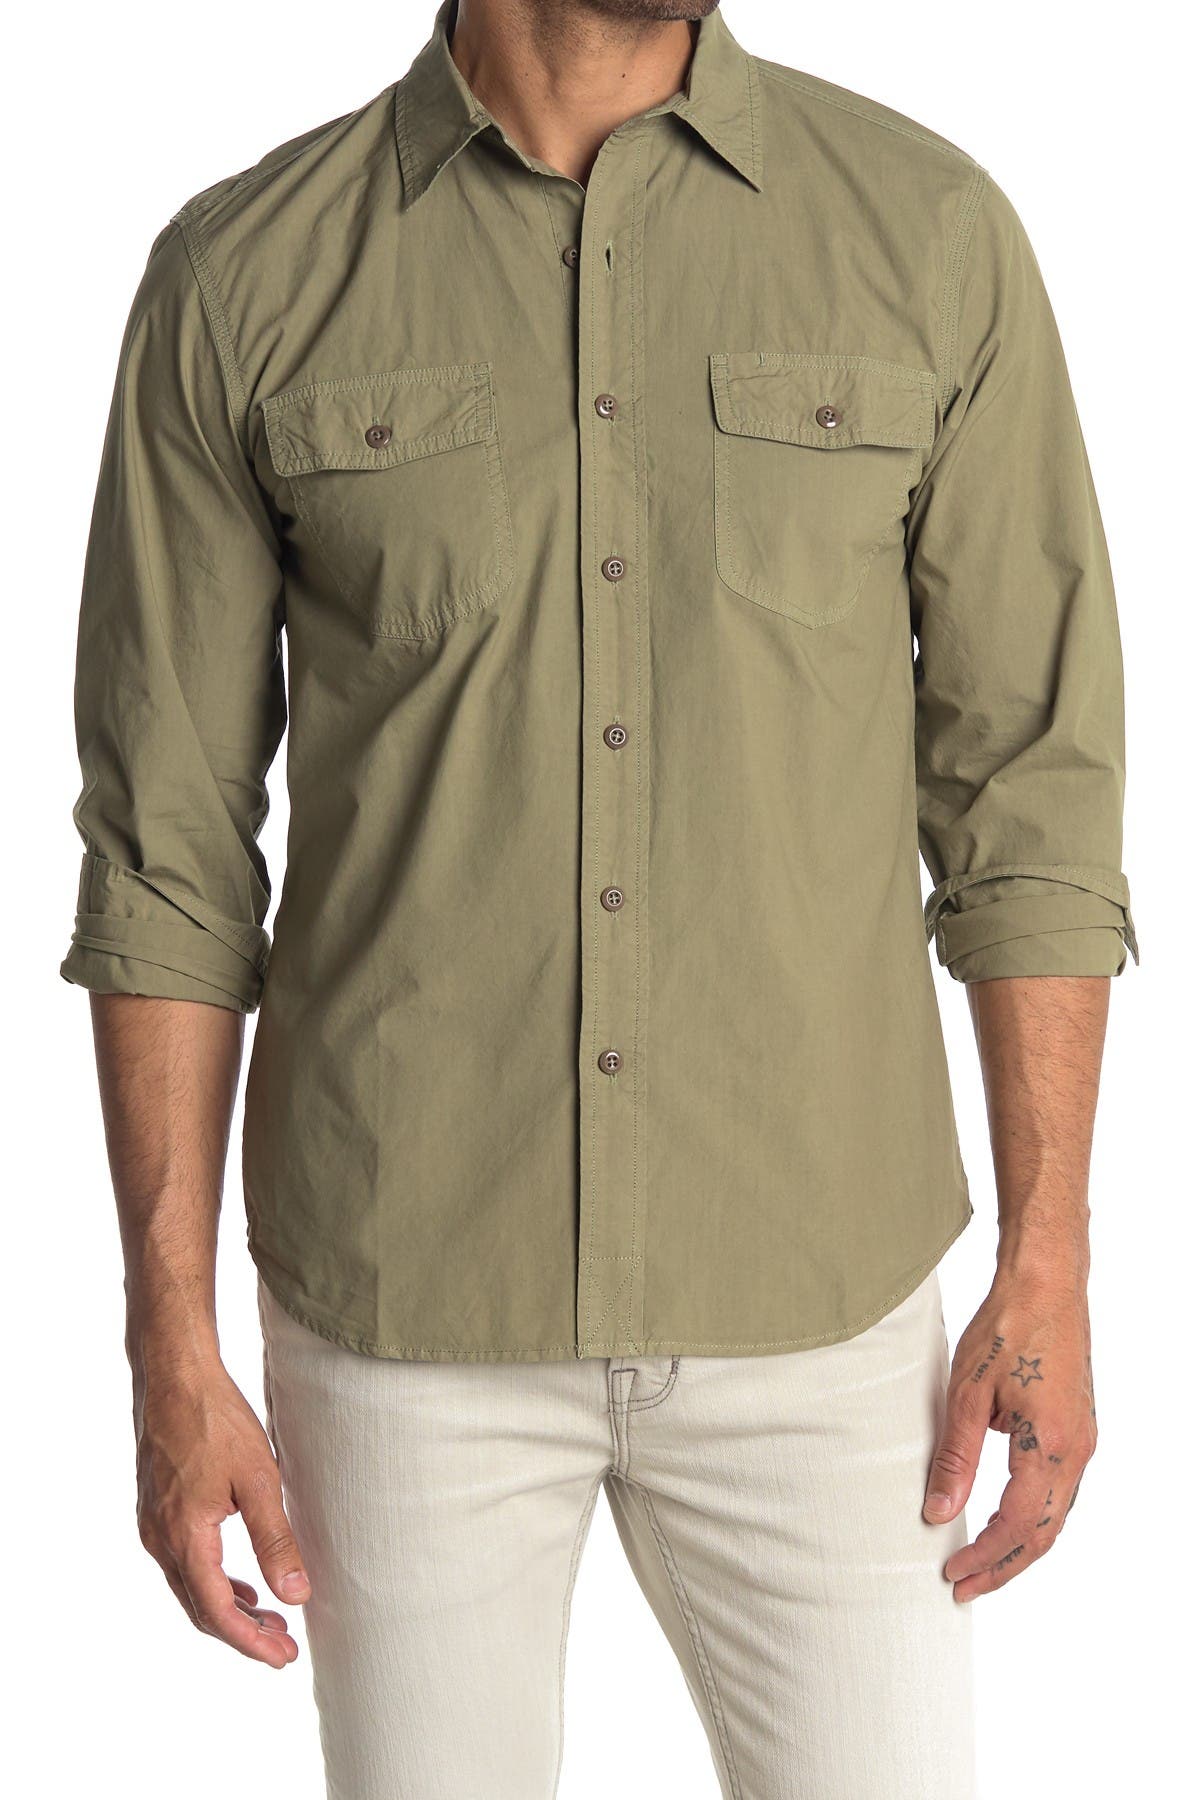 Alex Mill Patch Pocket Regular Fit Field Shirt In Open Green2